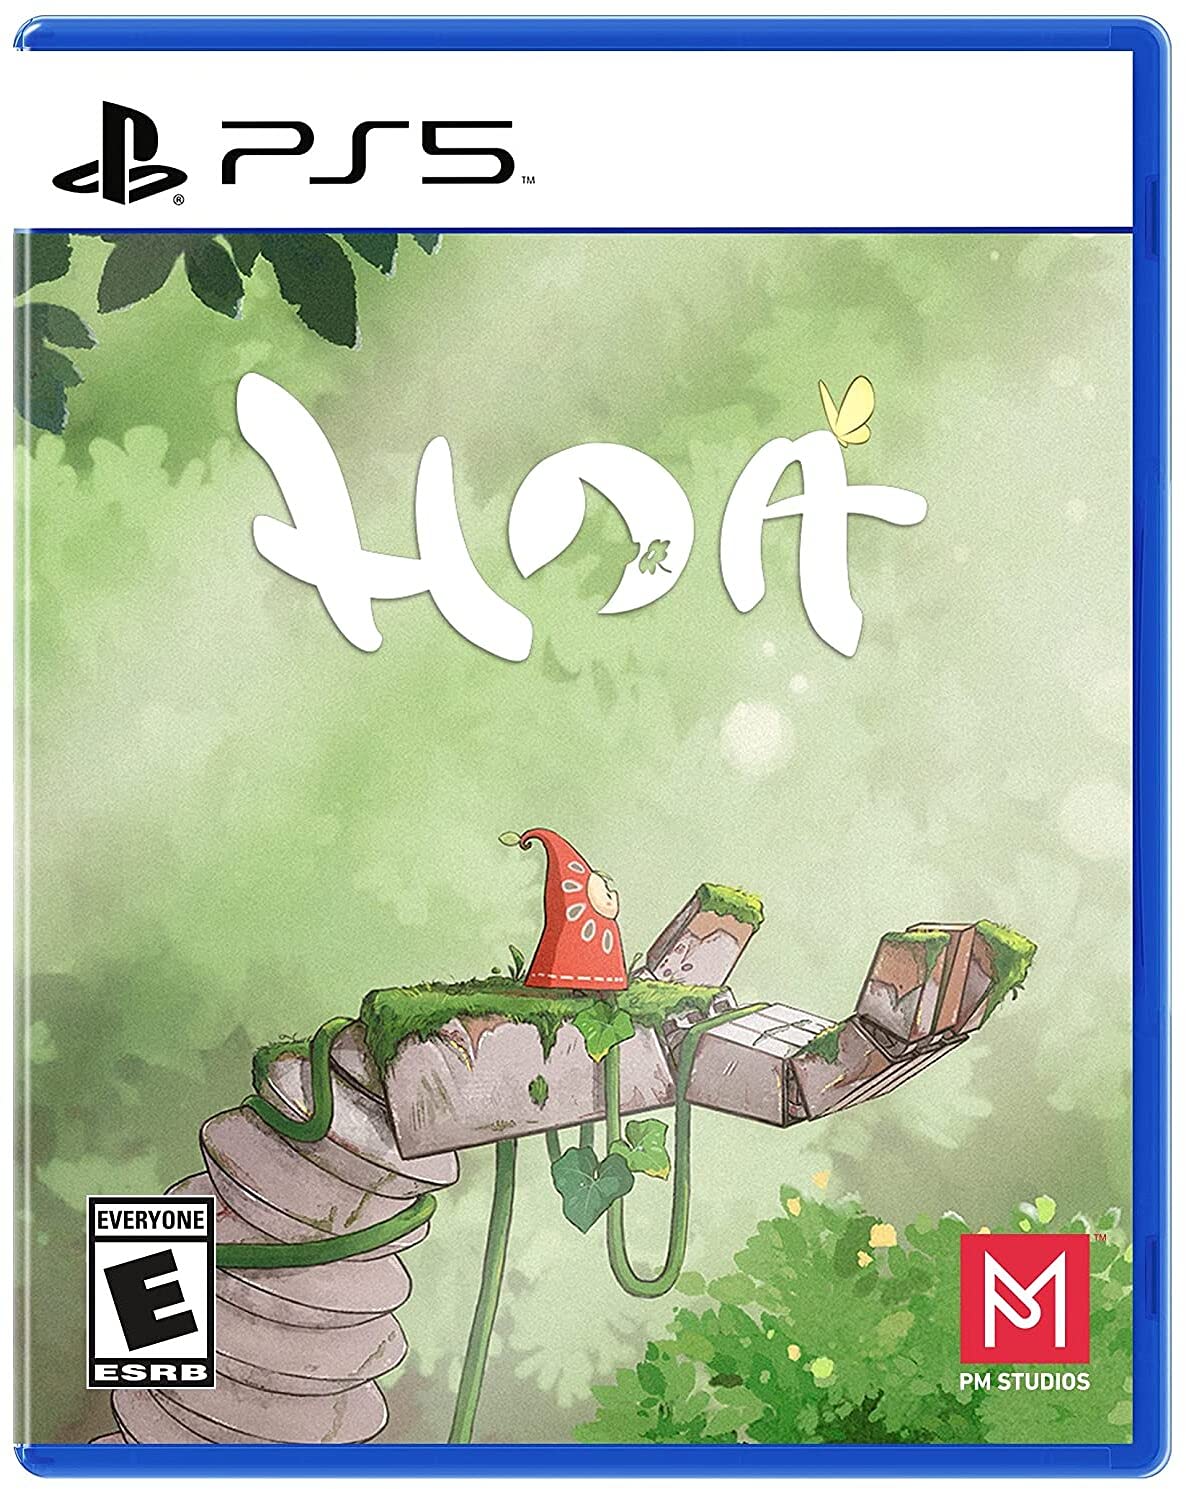 Hoa (PS4)